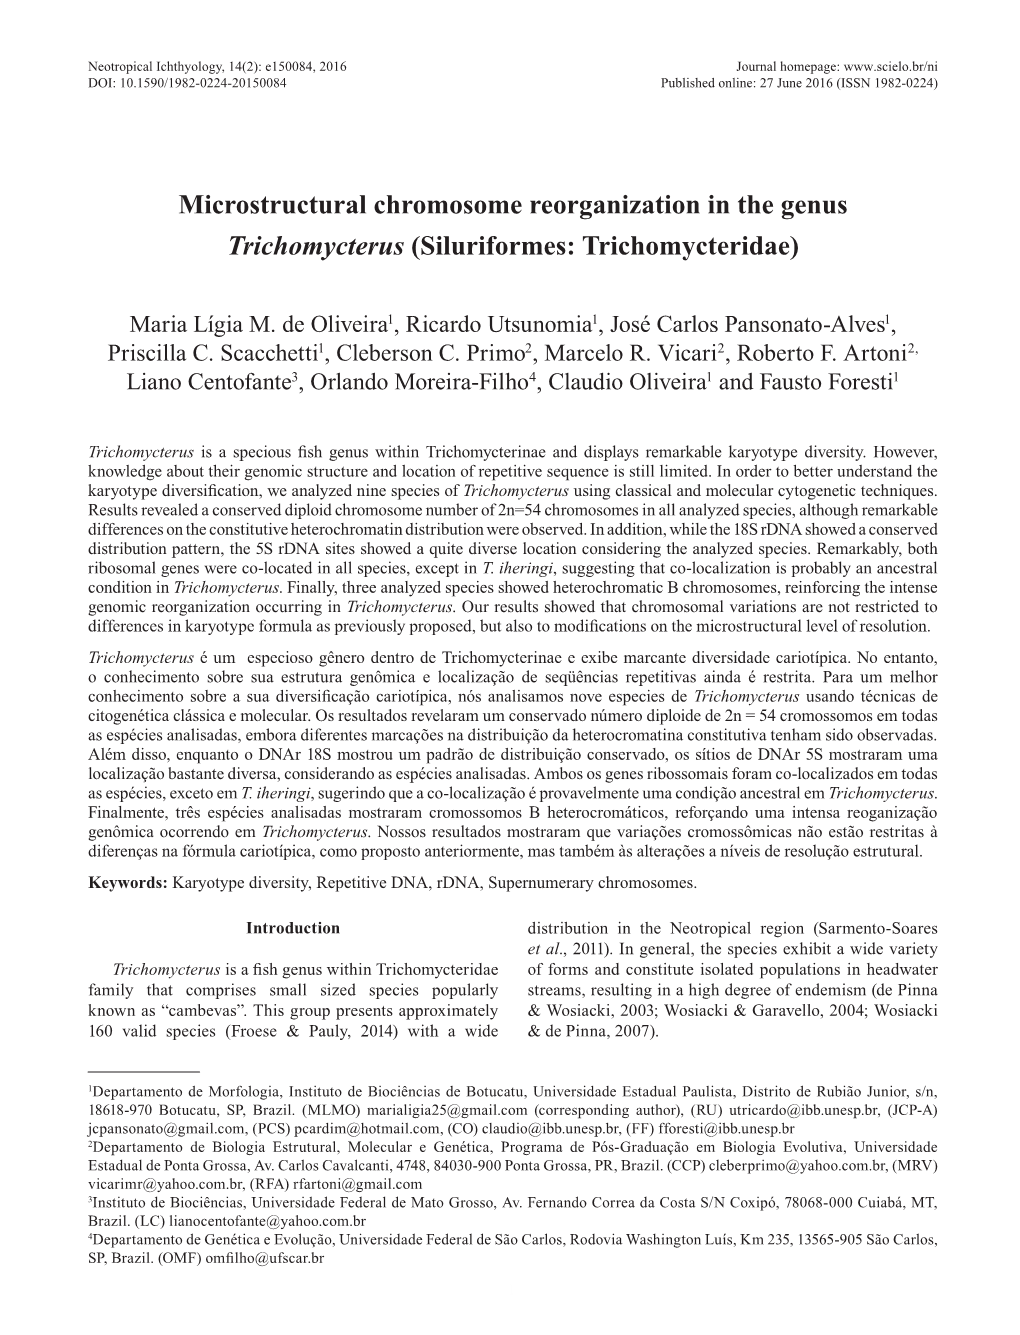 Microstructural Chromosome Reorganization in the Genus Trichomycterus (Siluriformes: Trichomycteridae)